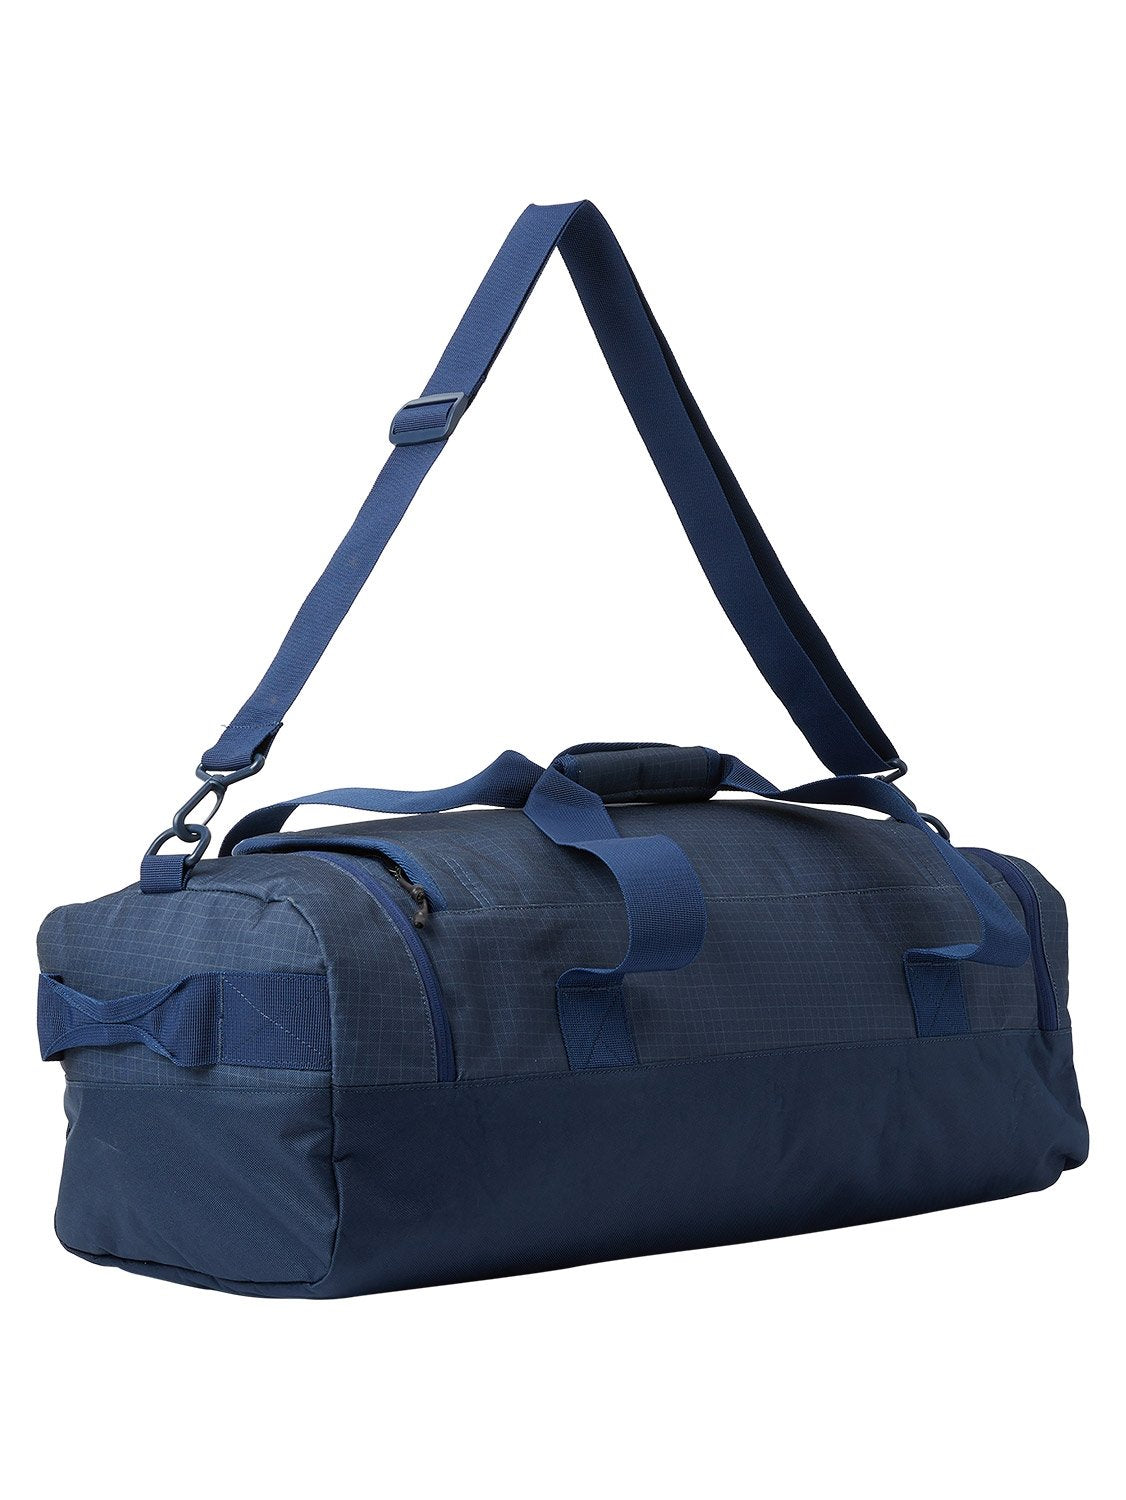 Quiksilver Men's Shelter Duffle Bag